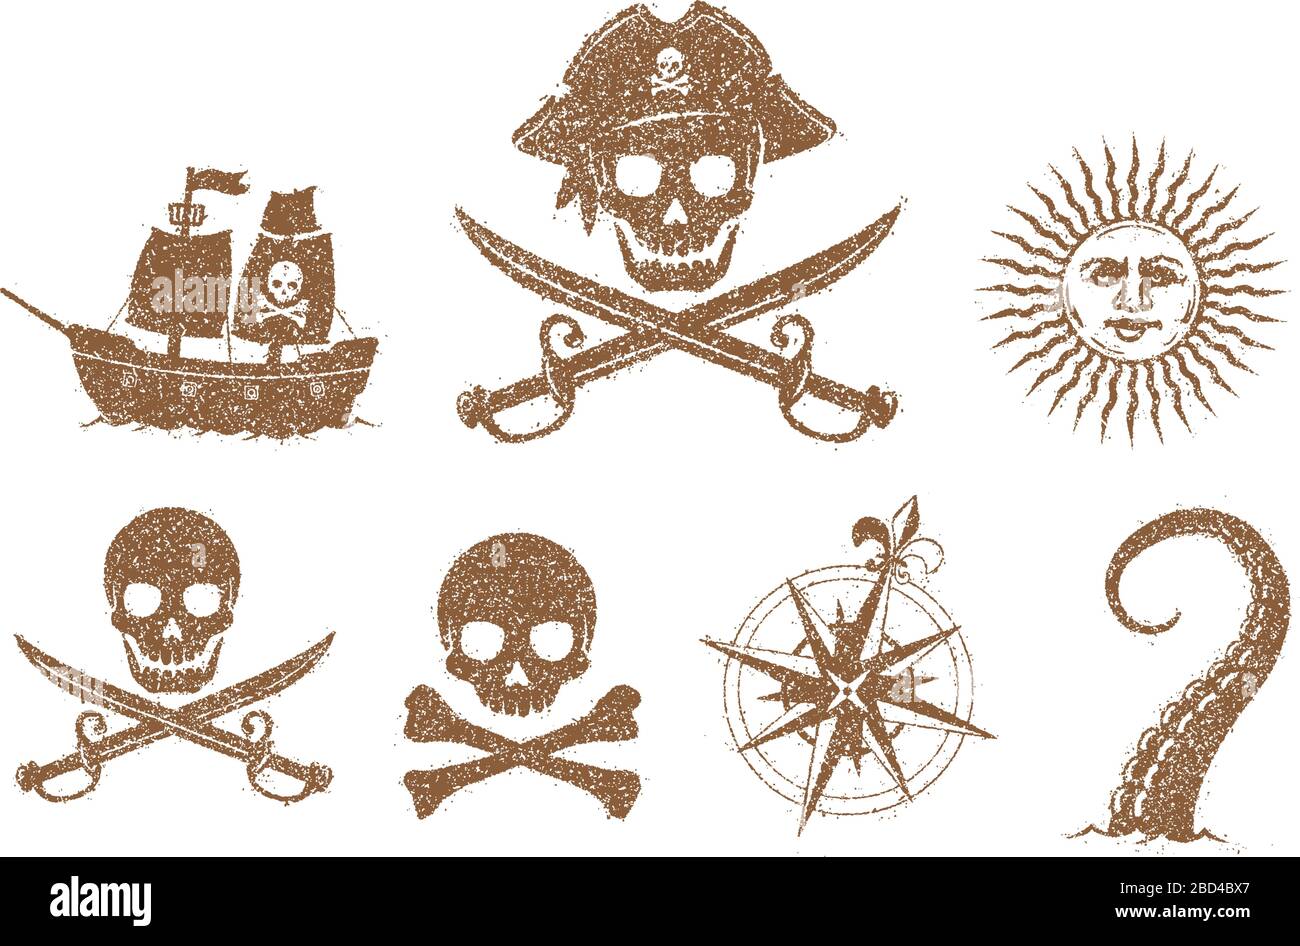 Piraten flache Illustration Set / Grunge Textur (Schädel, Anker, Vulkan, Schiff, Kompass, Sonne, kraken usw.) Stock Vektor